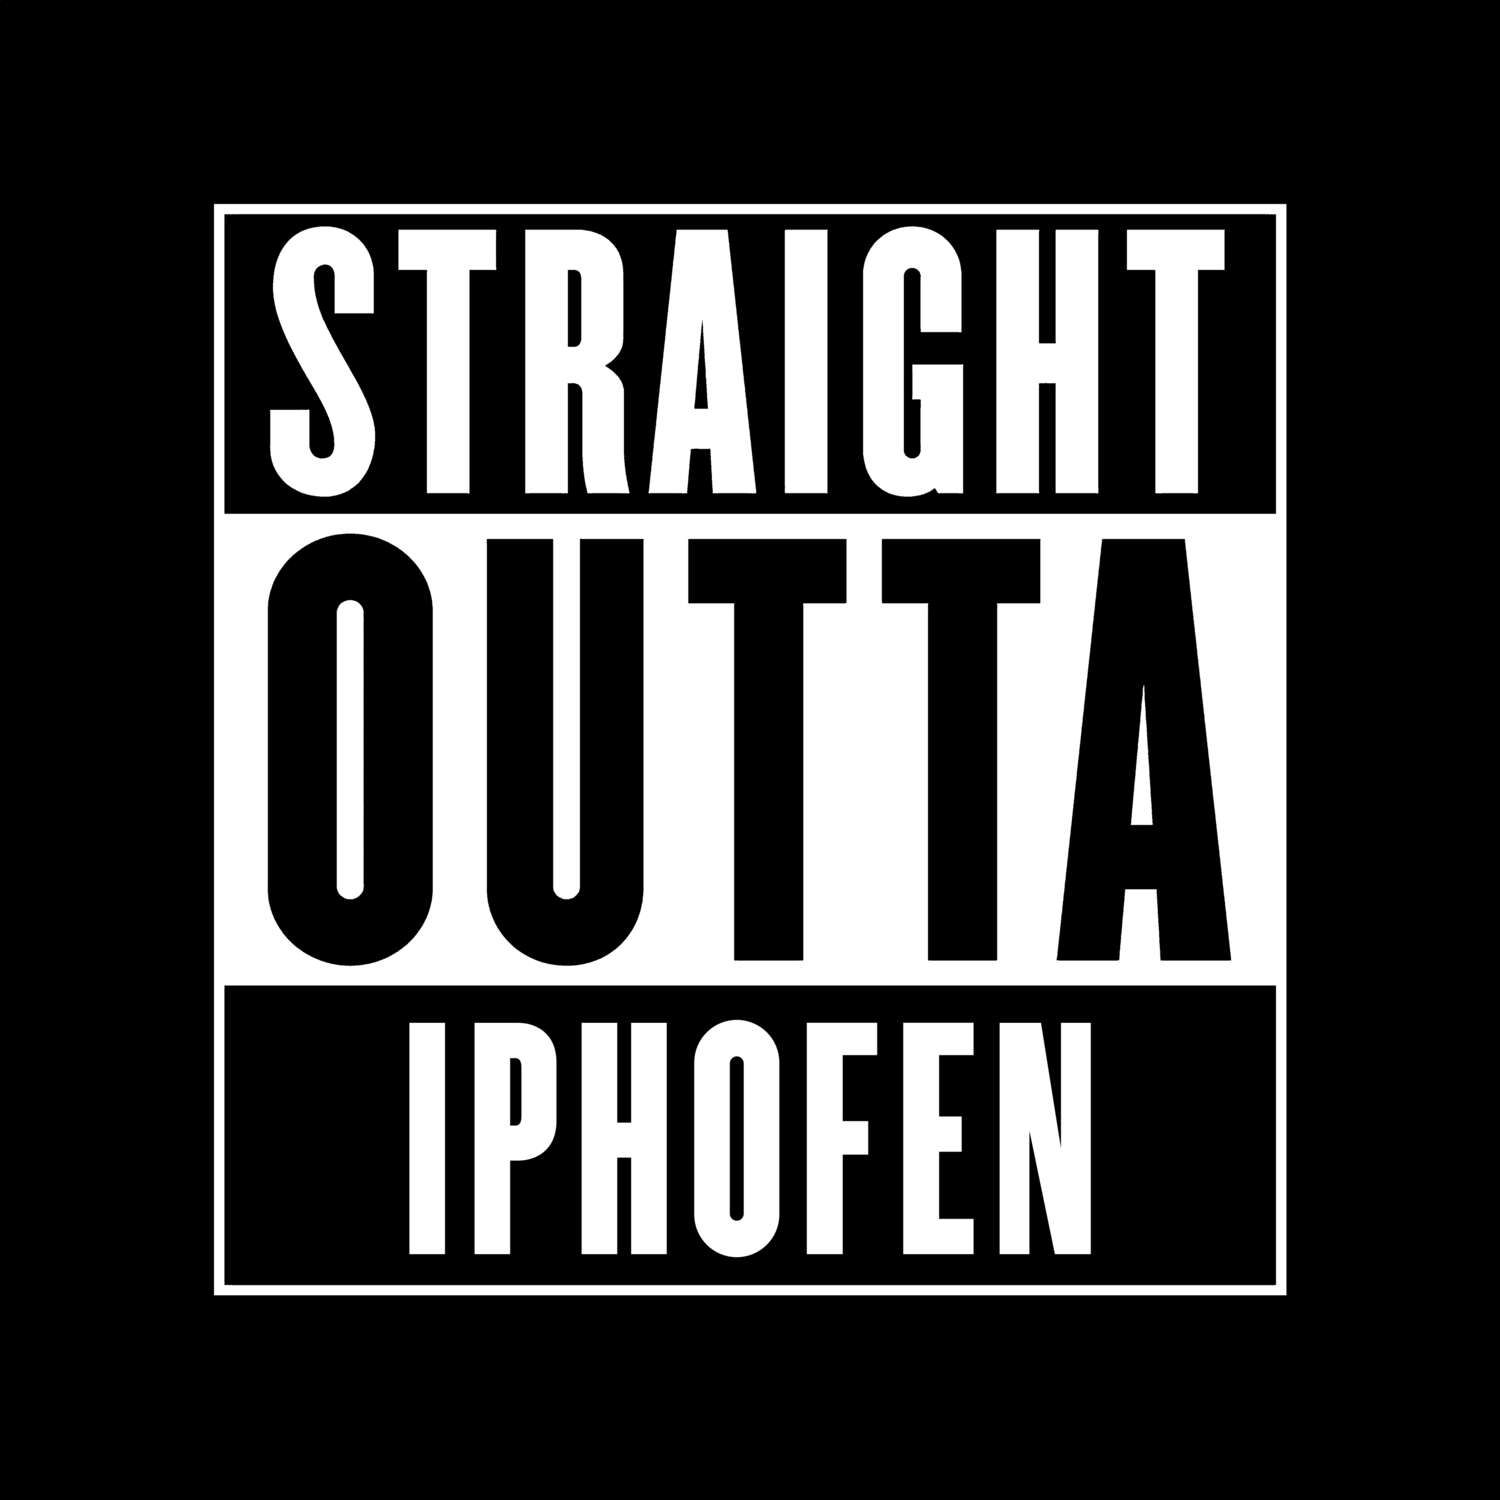 Iphofen T-Shirt »Straight Outta«